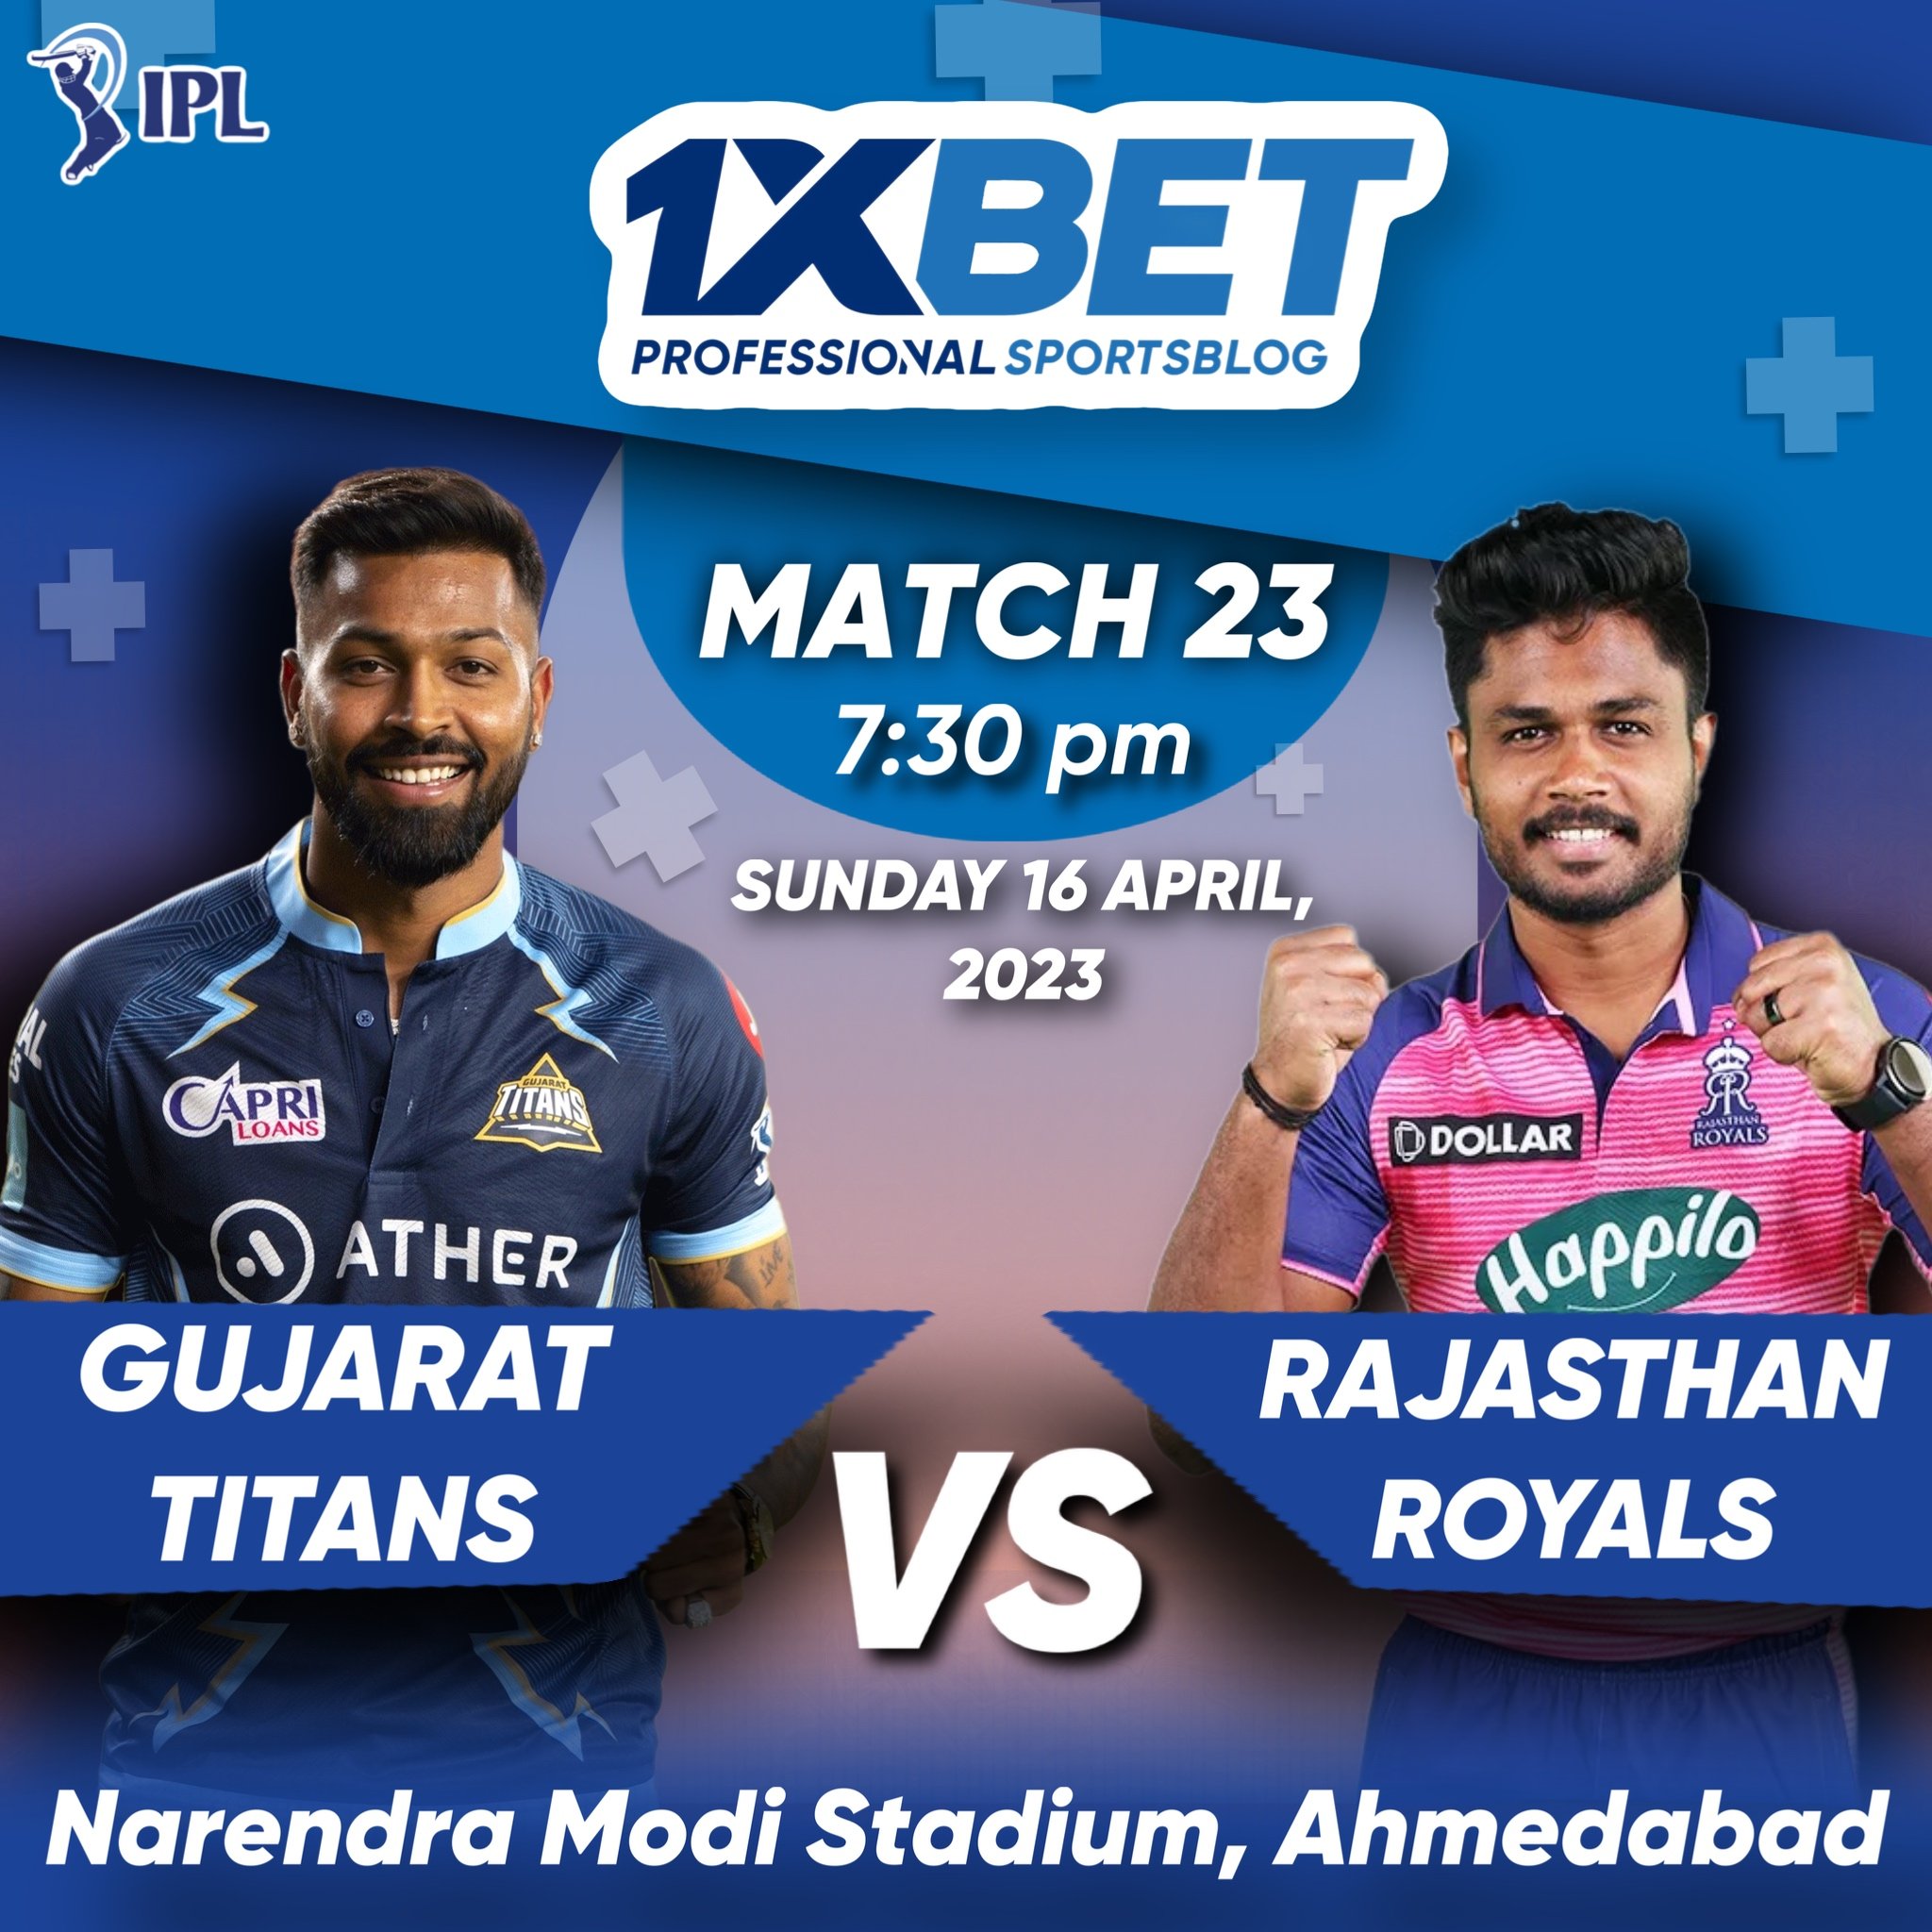 Gujarat Titans vs Rajasthan Royals, IPL 2023, 23rd Match Analysis